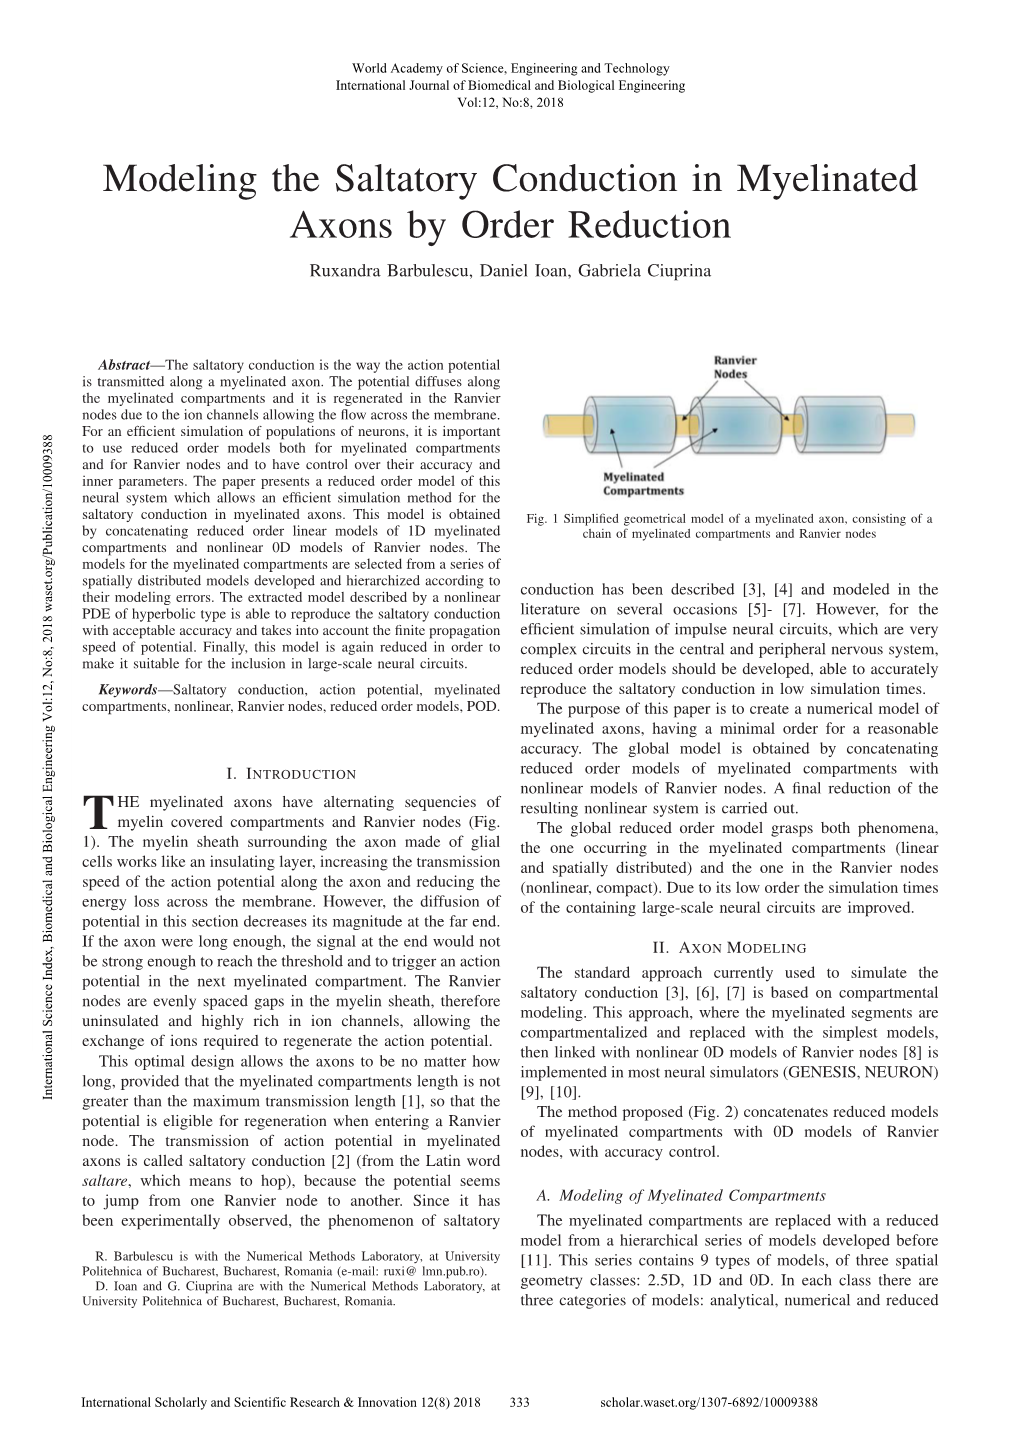 Modeling the Saltatory Conduction in Myelinated Axons by Order Reduction Ruxandra Barbulescu, Daniel Ioan, Gabriela Ciuprina